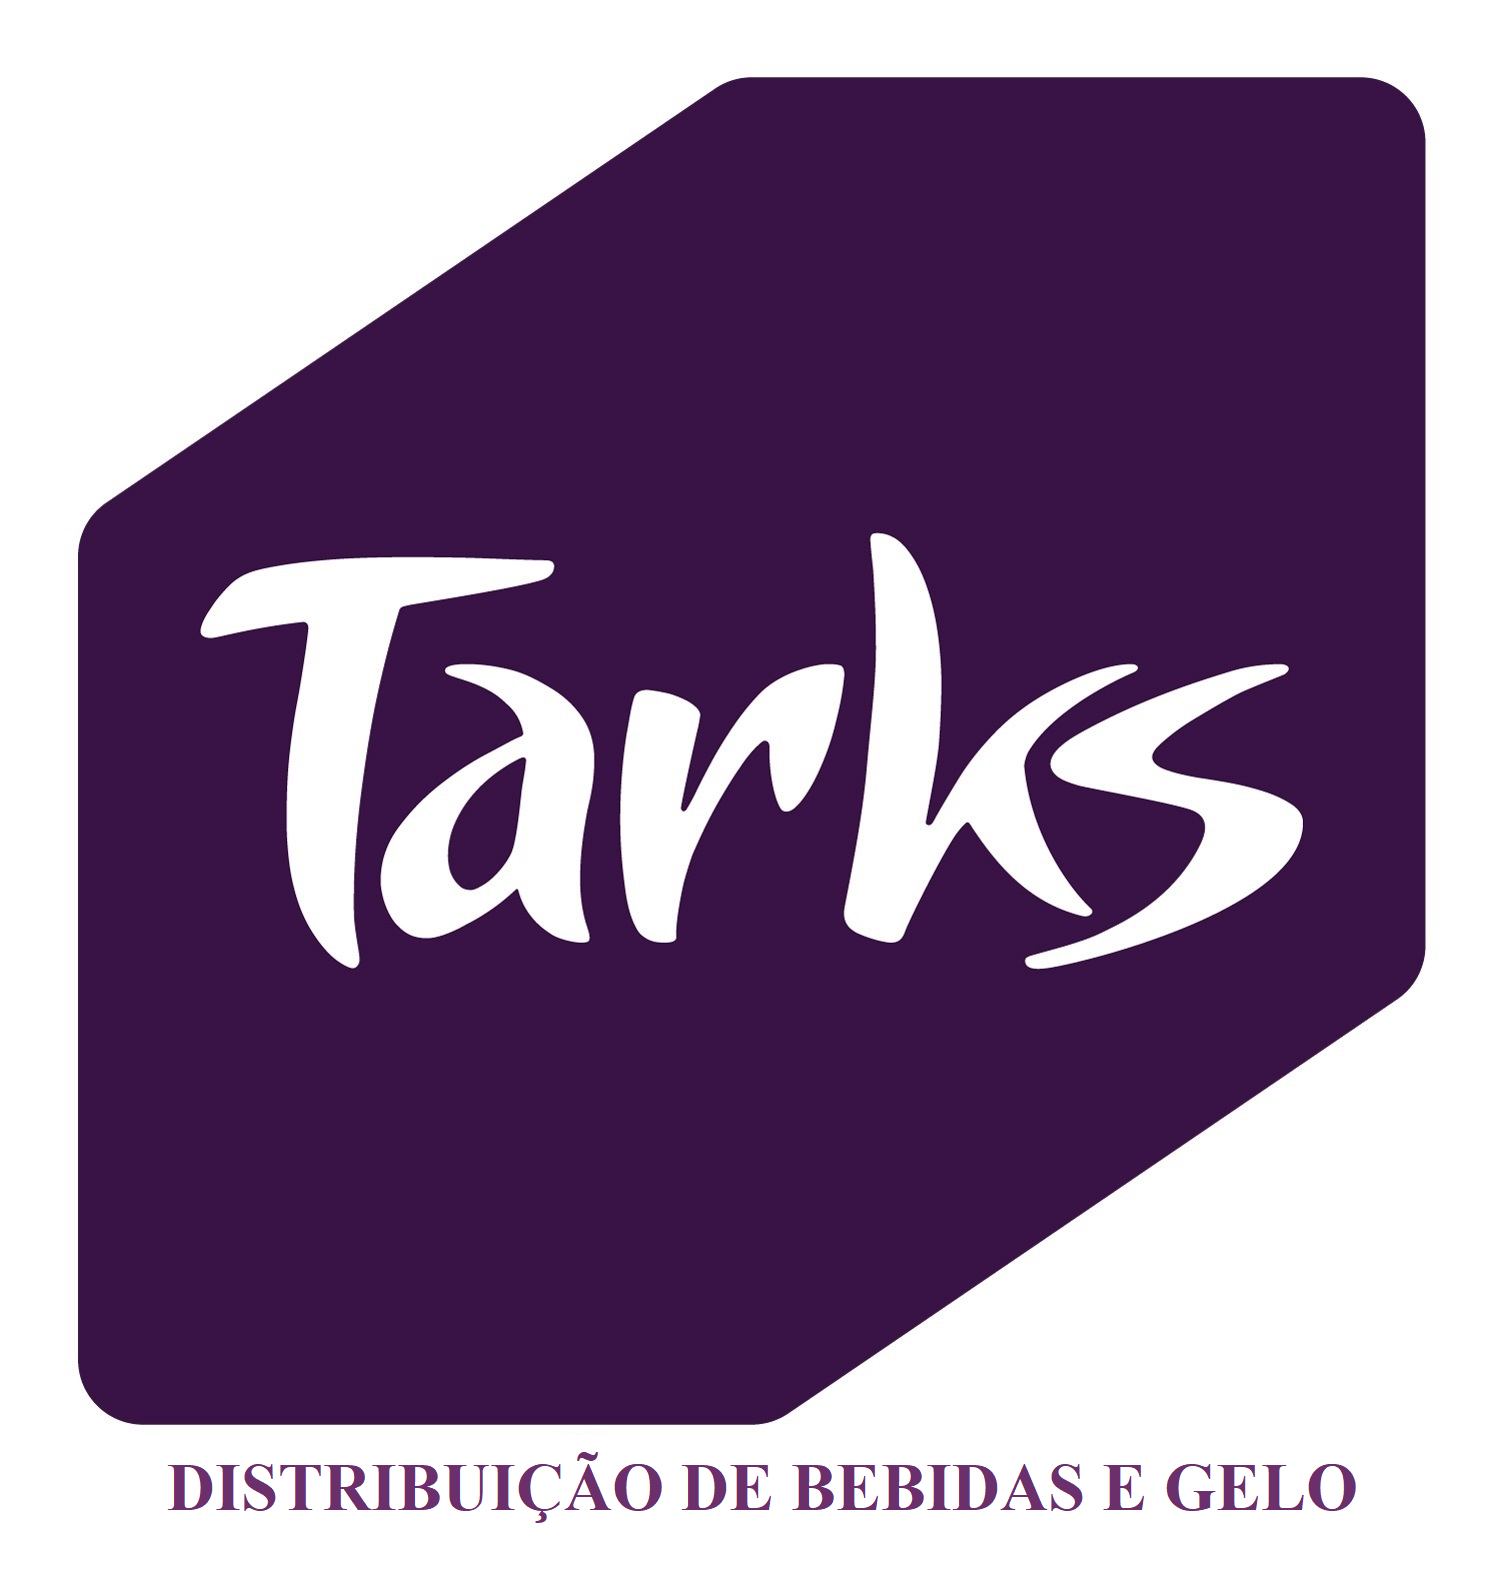 tarks_disMENOR